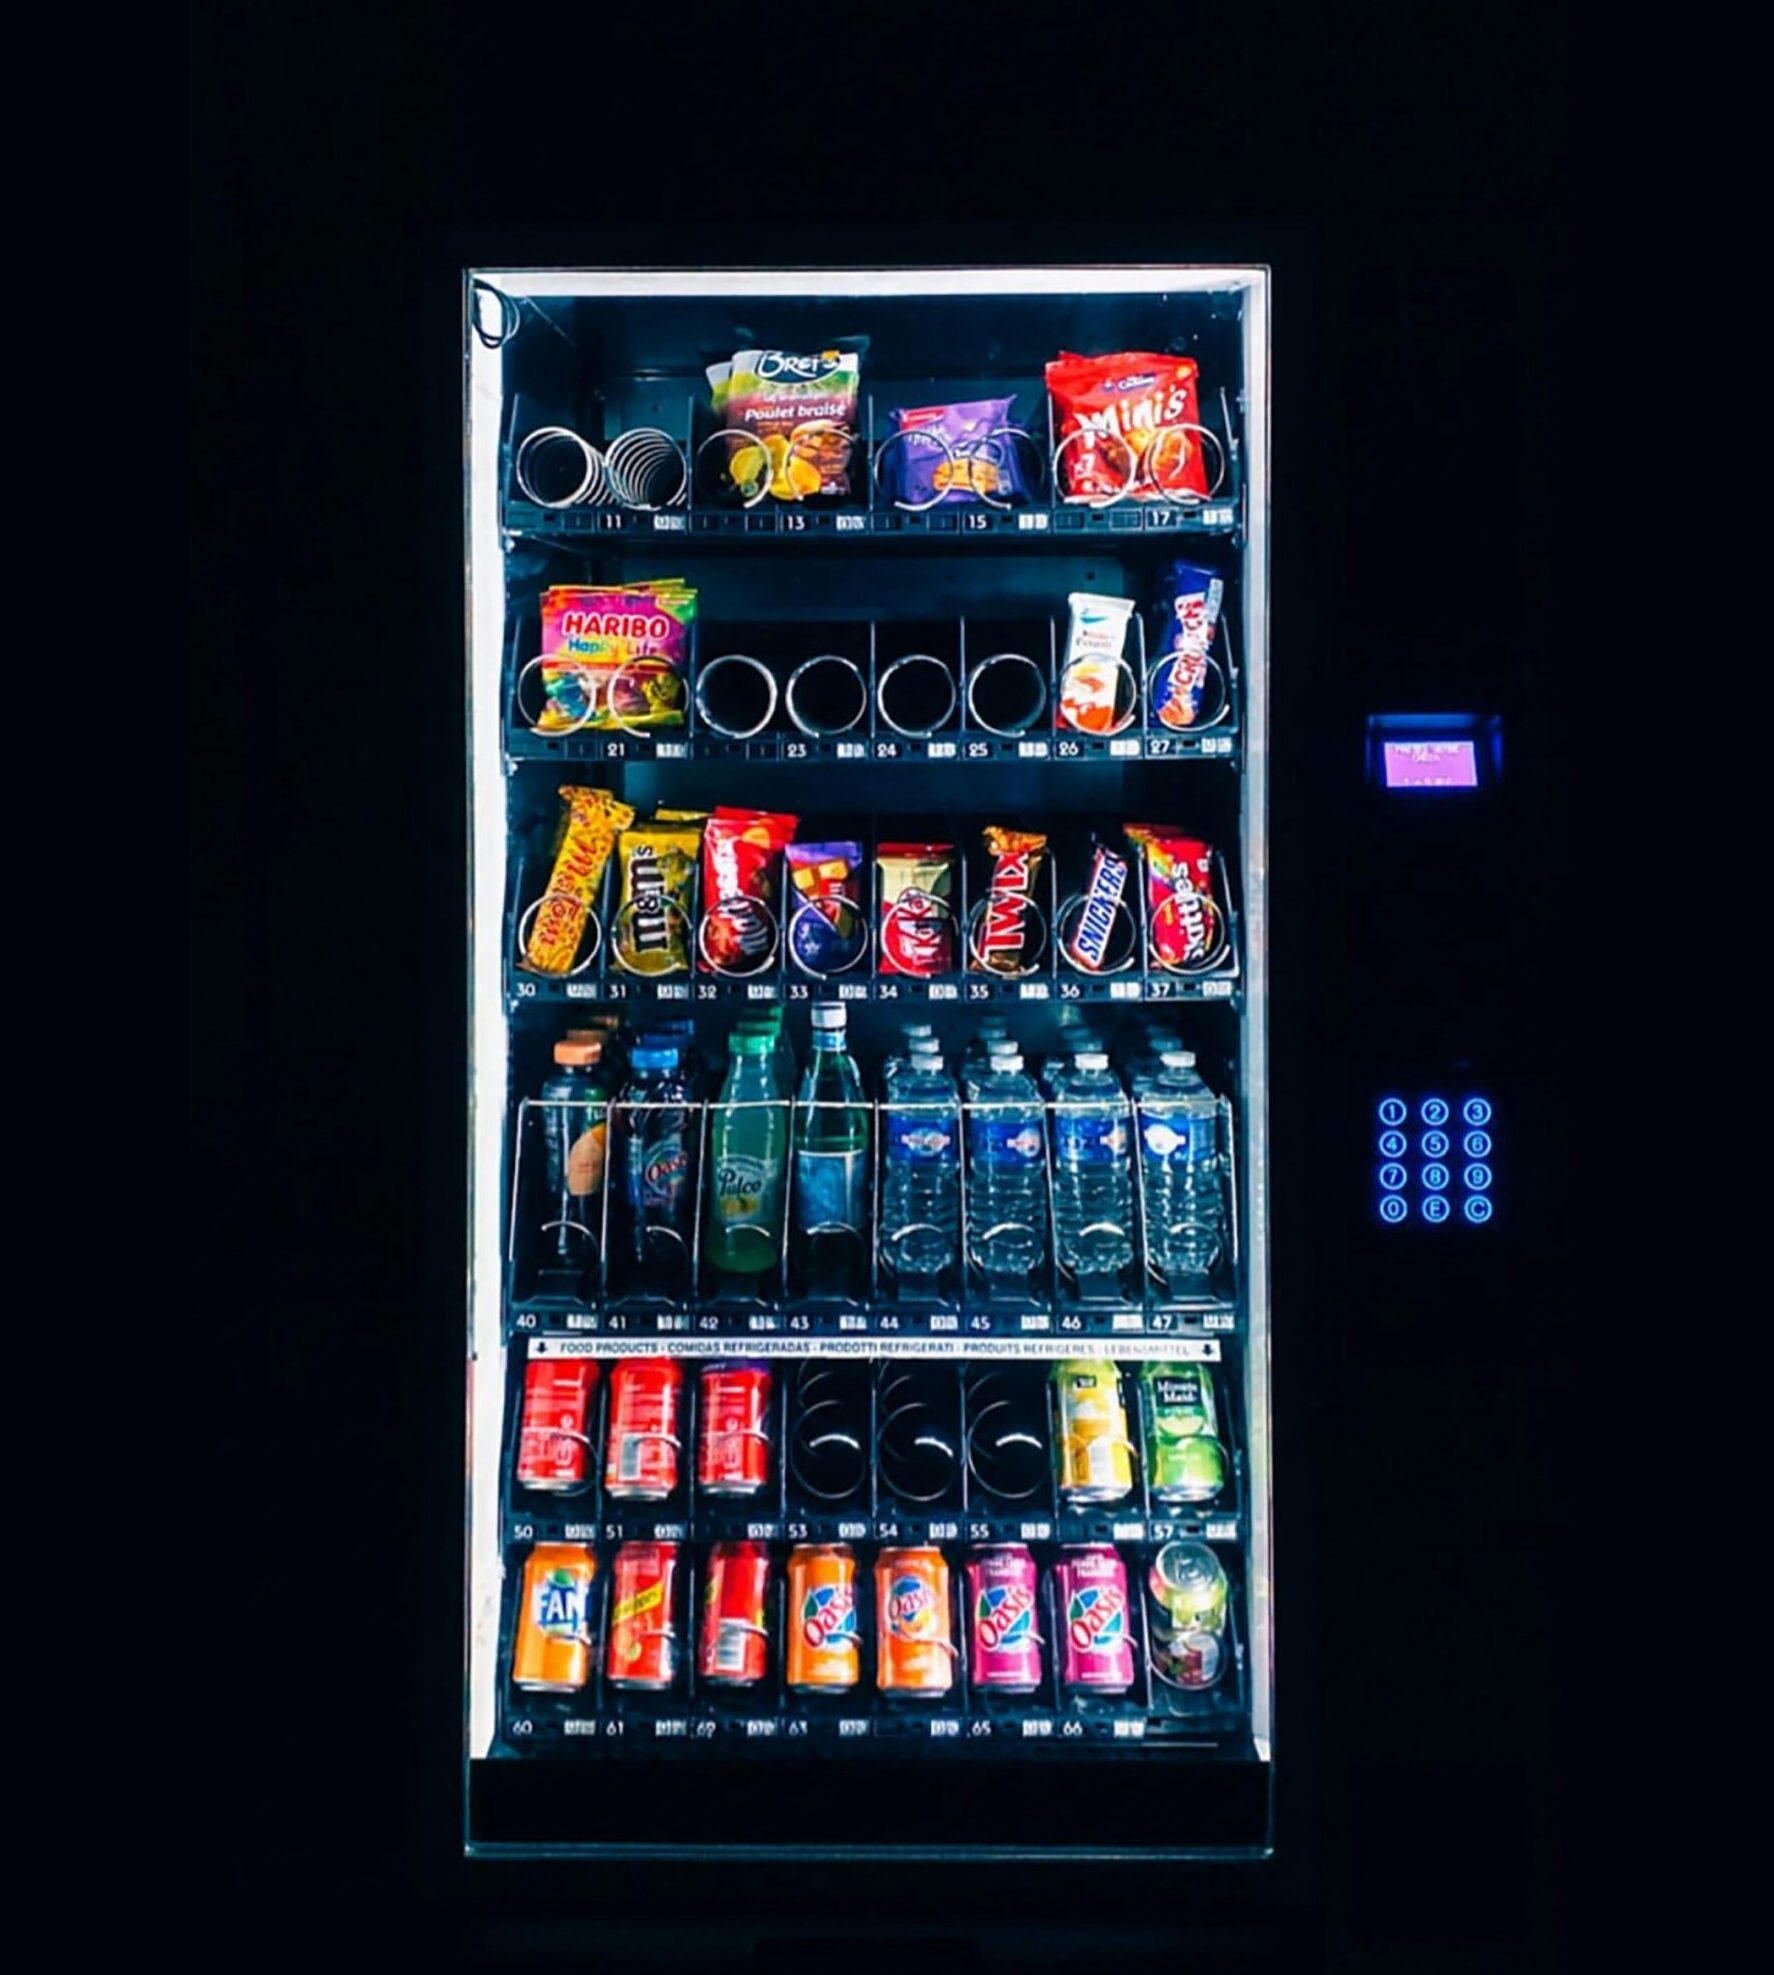 Advanced vending machine in an Irish urban setting, showcasing modern design and digital interface